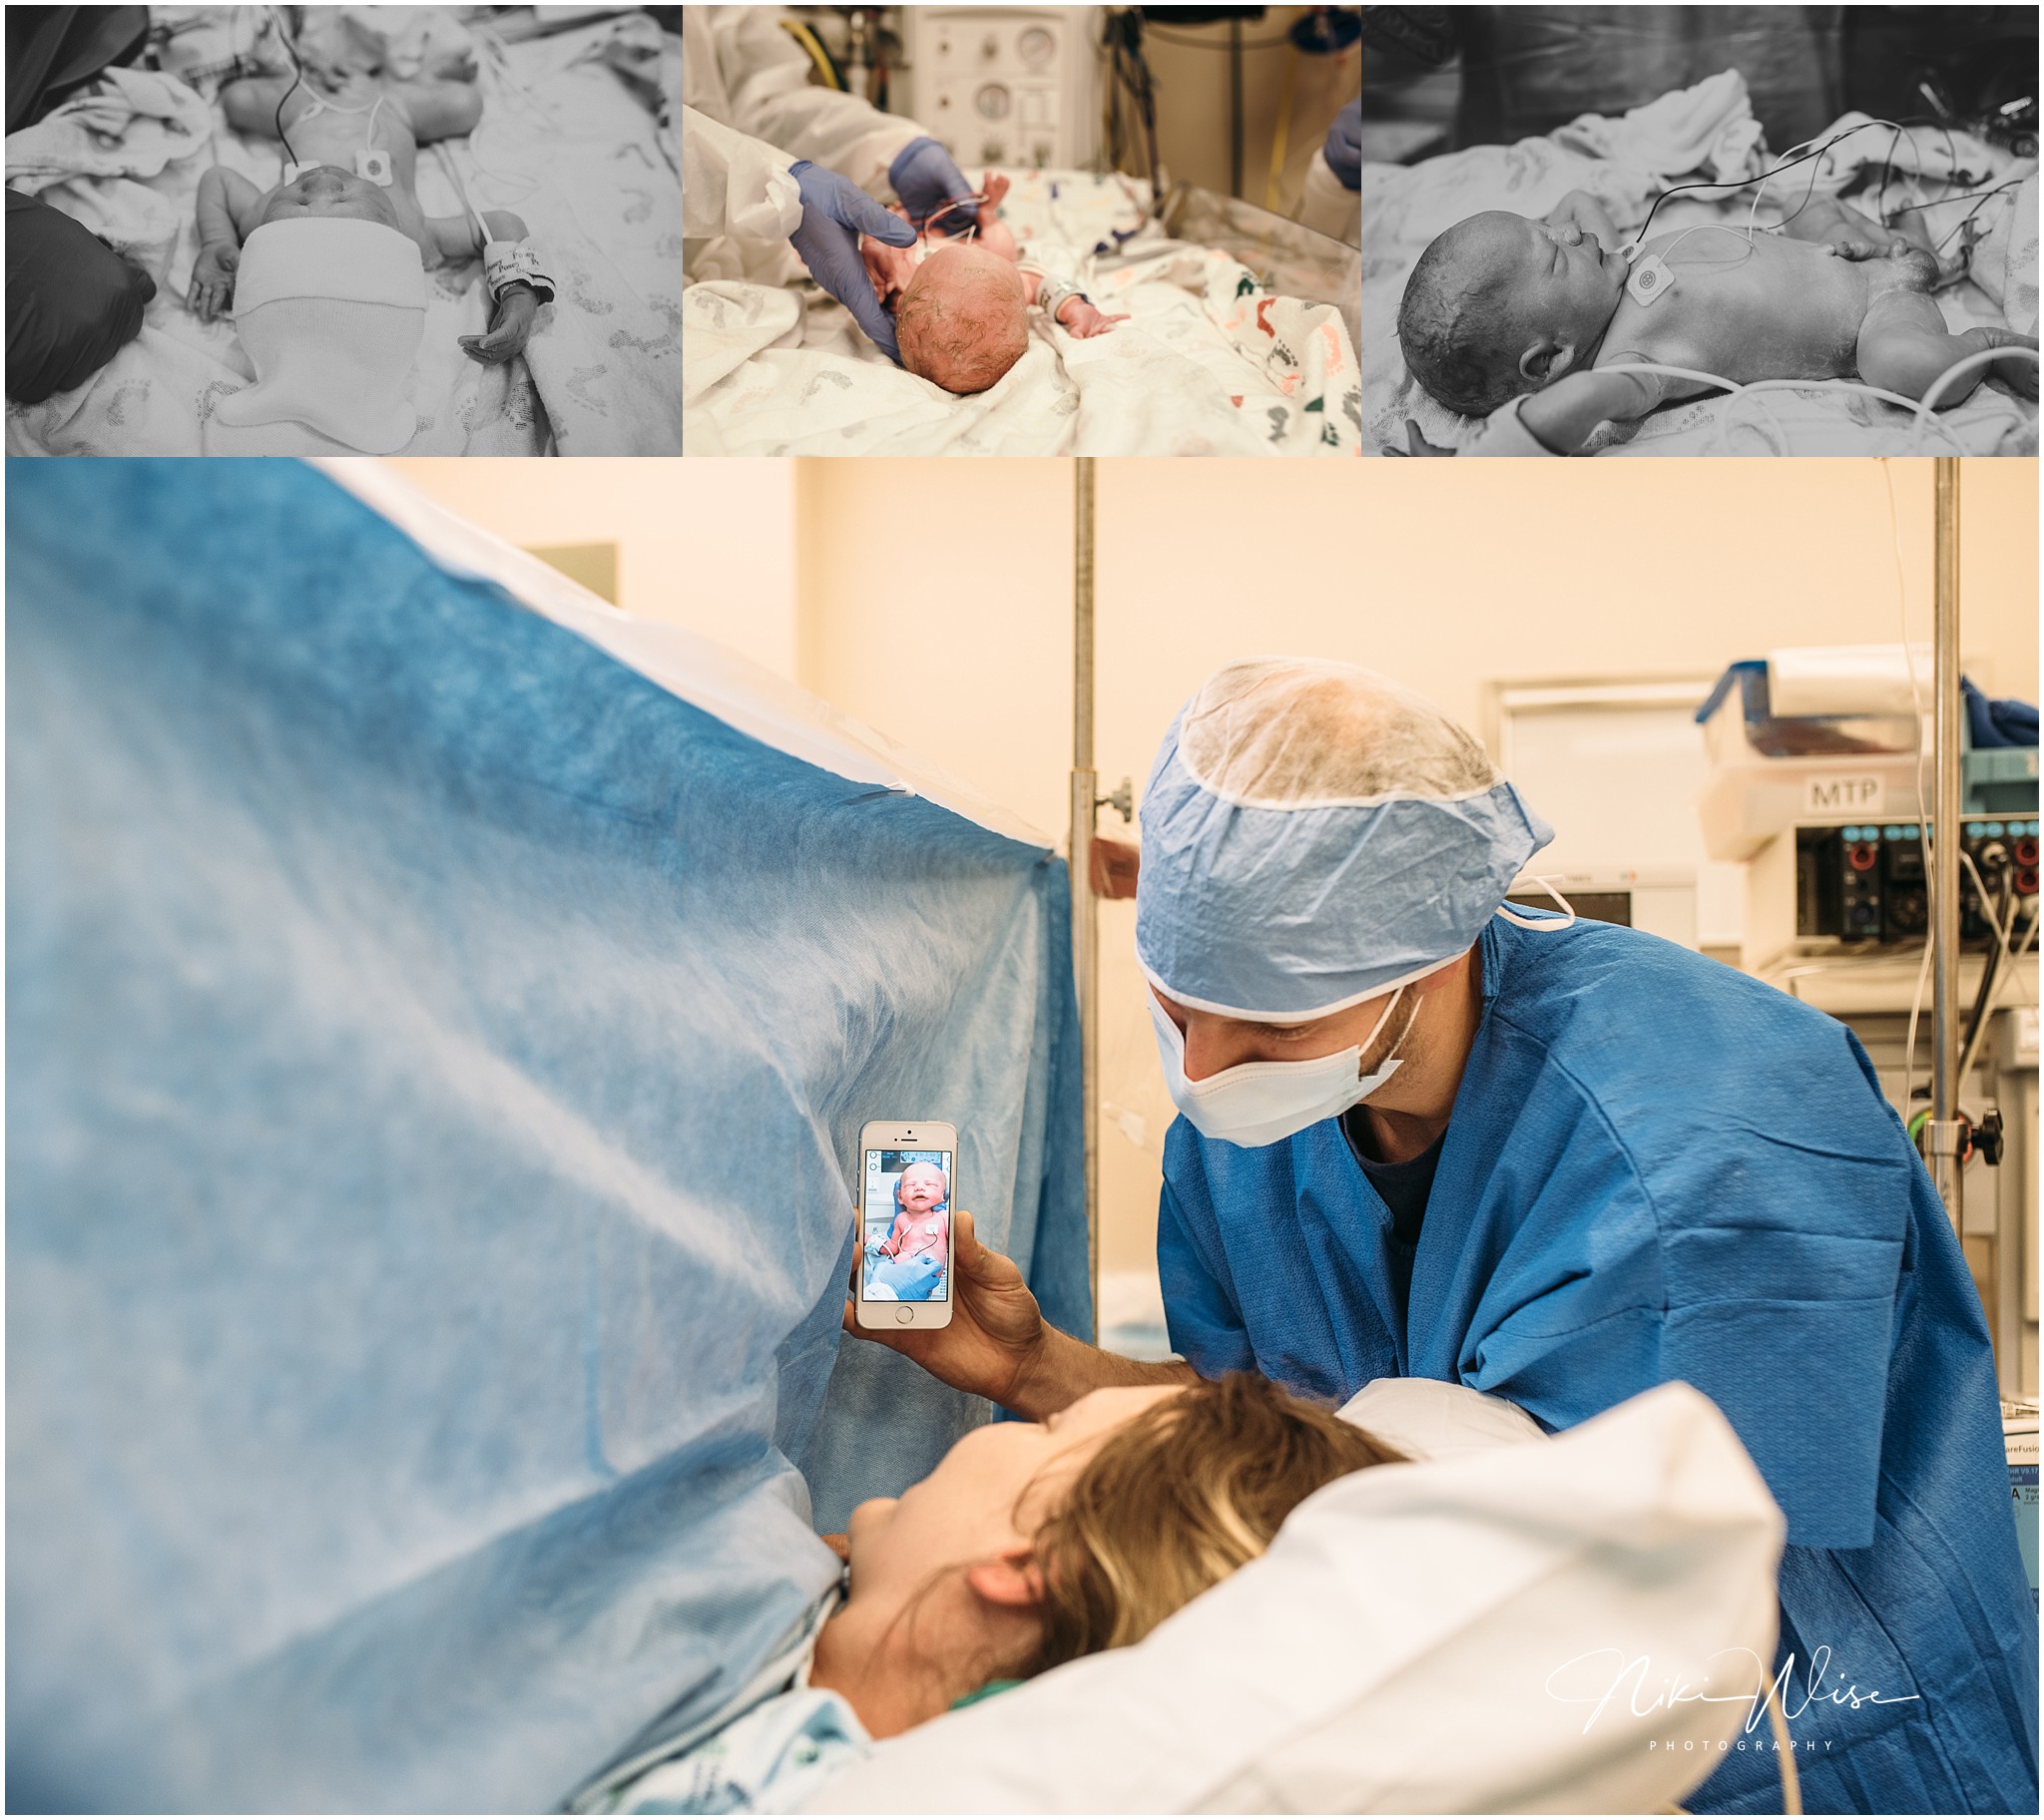 Margot Perot Hospital Birth Session